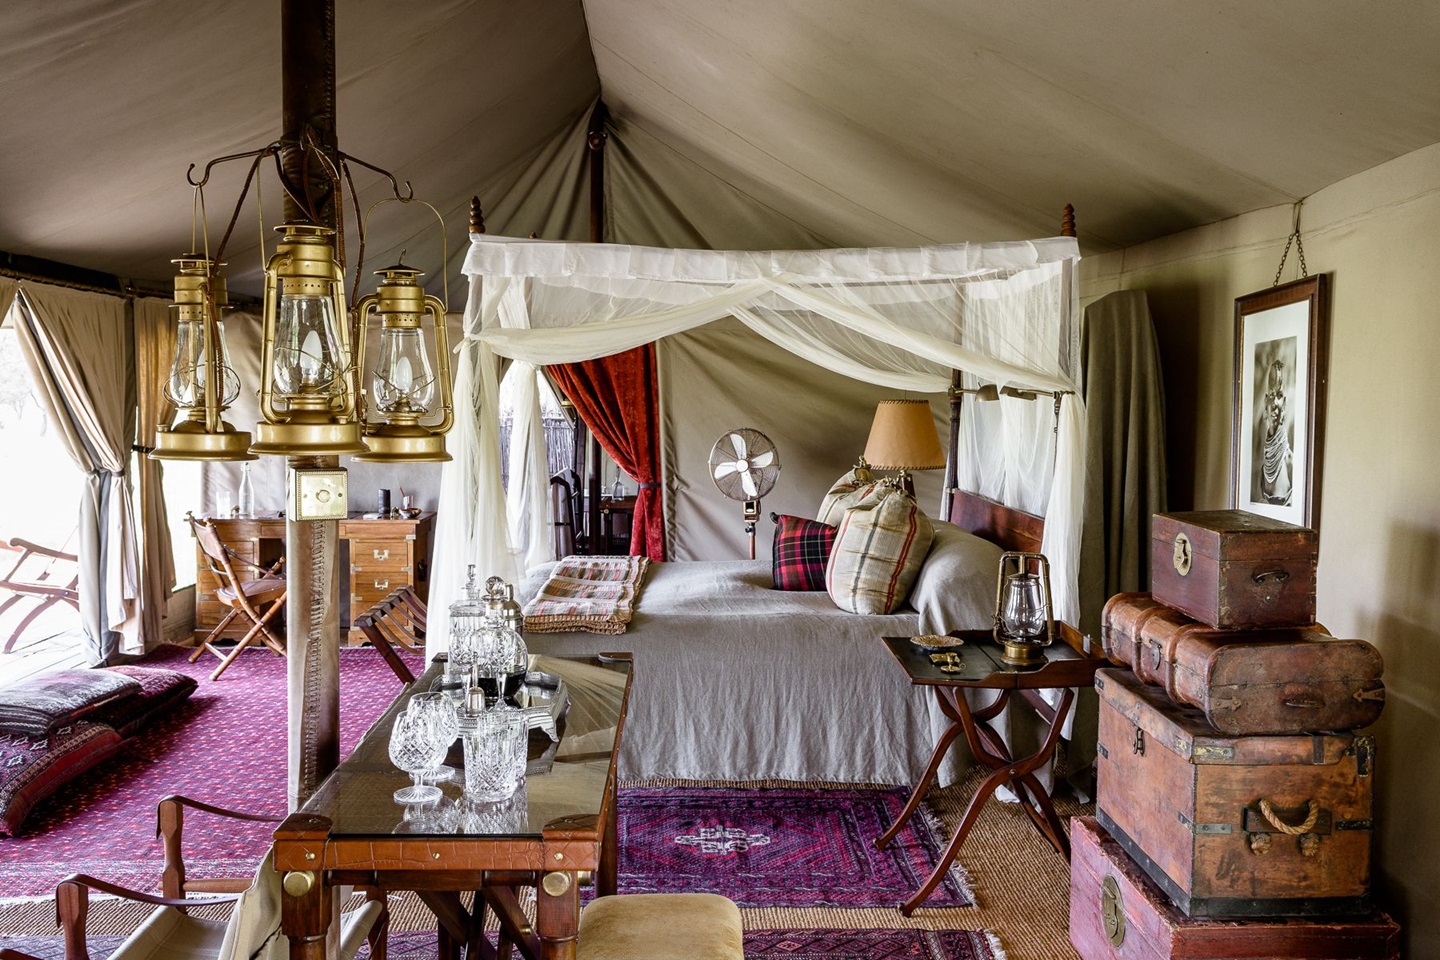 singita-sabora-tented-camp-room-tent-interior-01.jpg